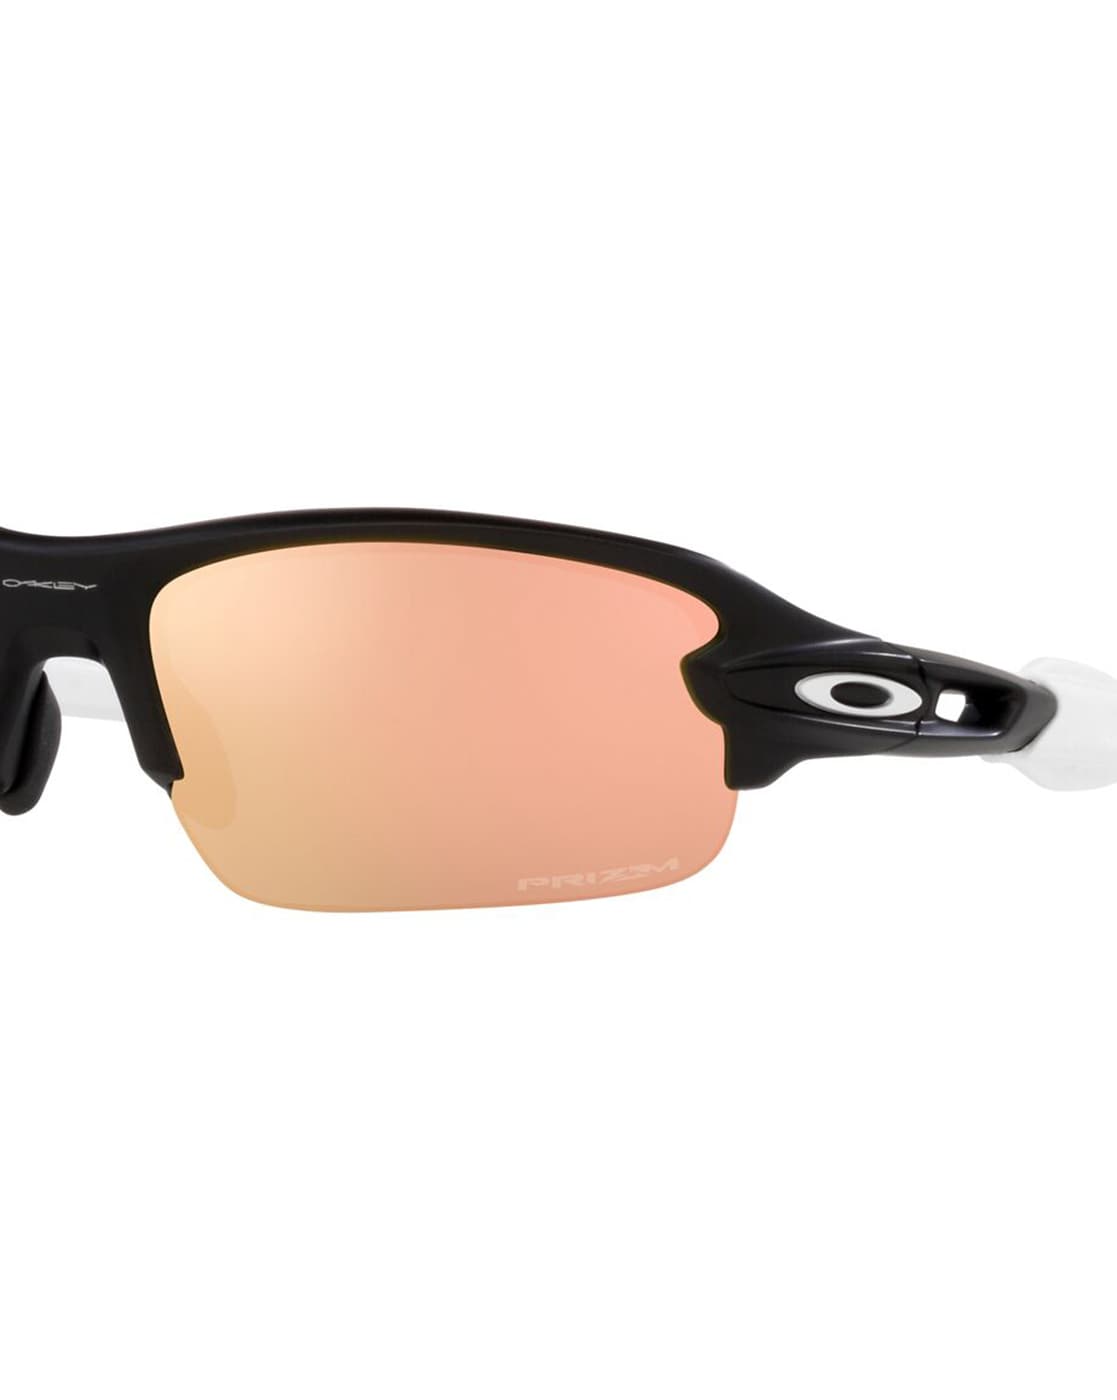 HOT* Oakley Sunglasses only $39.99 shipped! (Reg. $224)